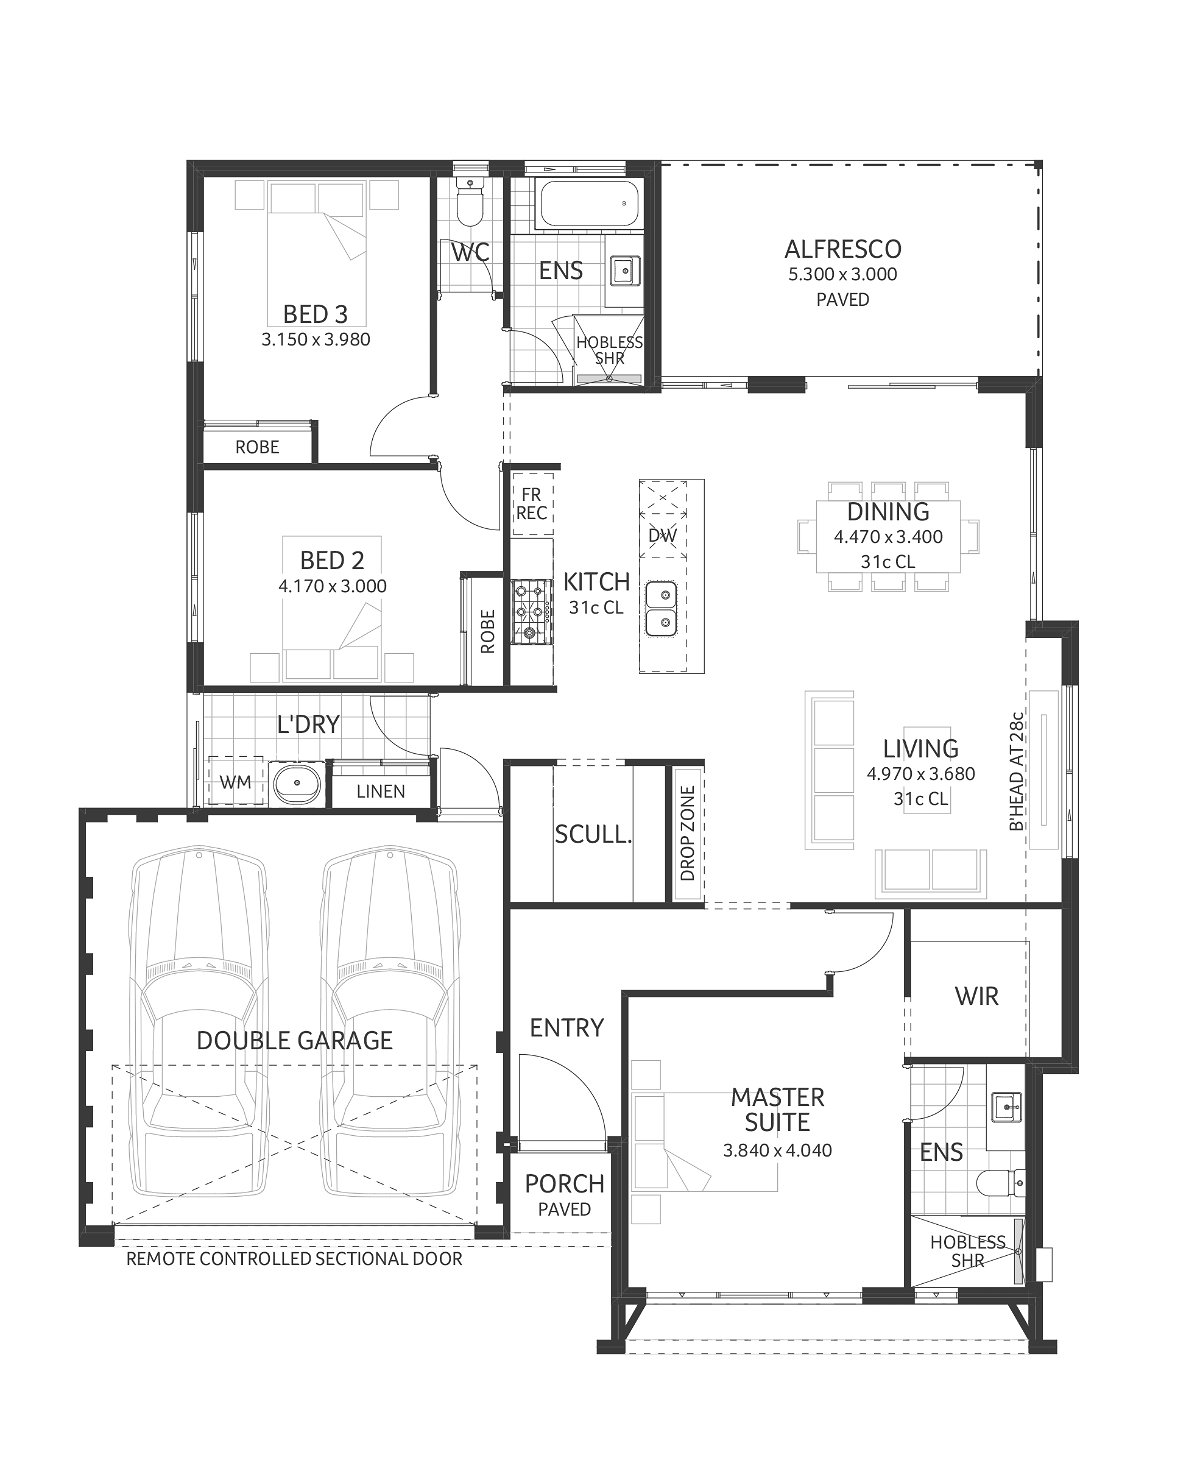 Plunkett Homes - Sandalwood | Contemporary - Floorplan - Sandalwood Luxe Marketing Plan Croppedjpg